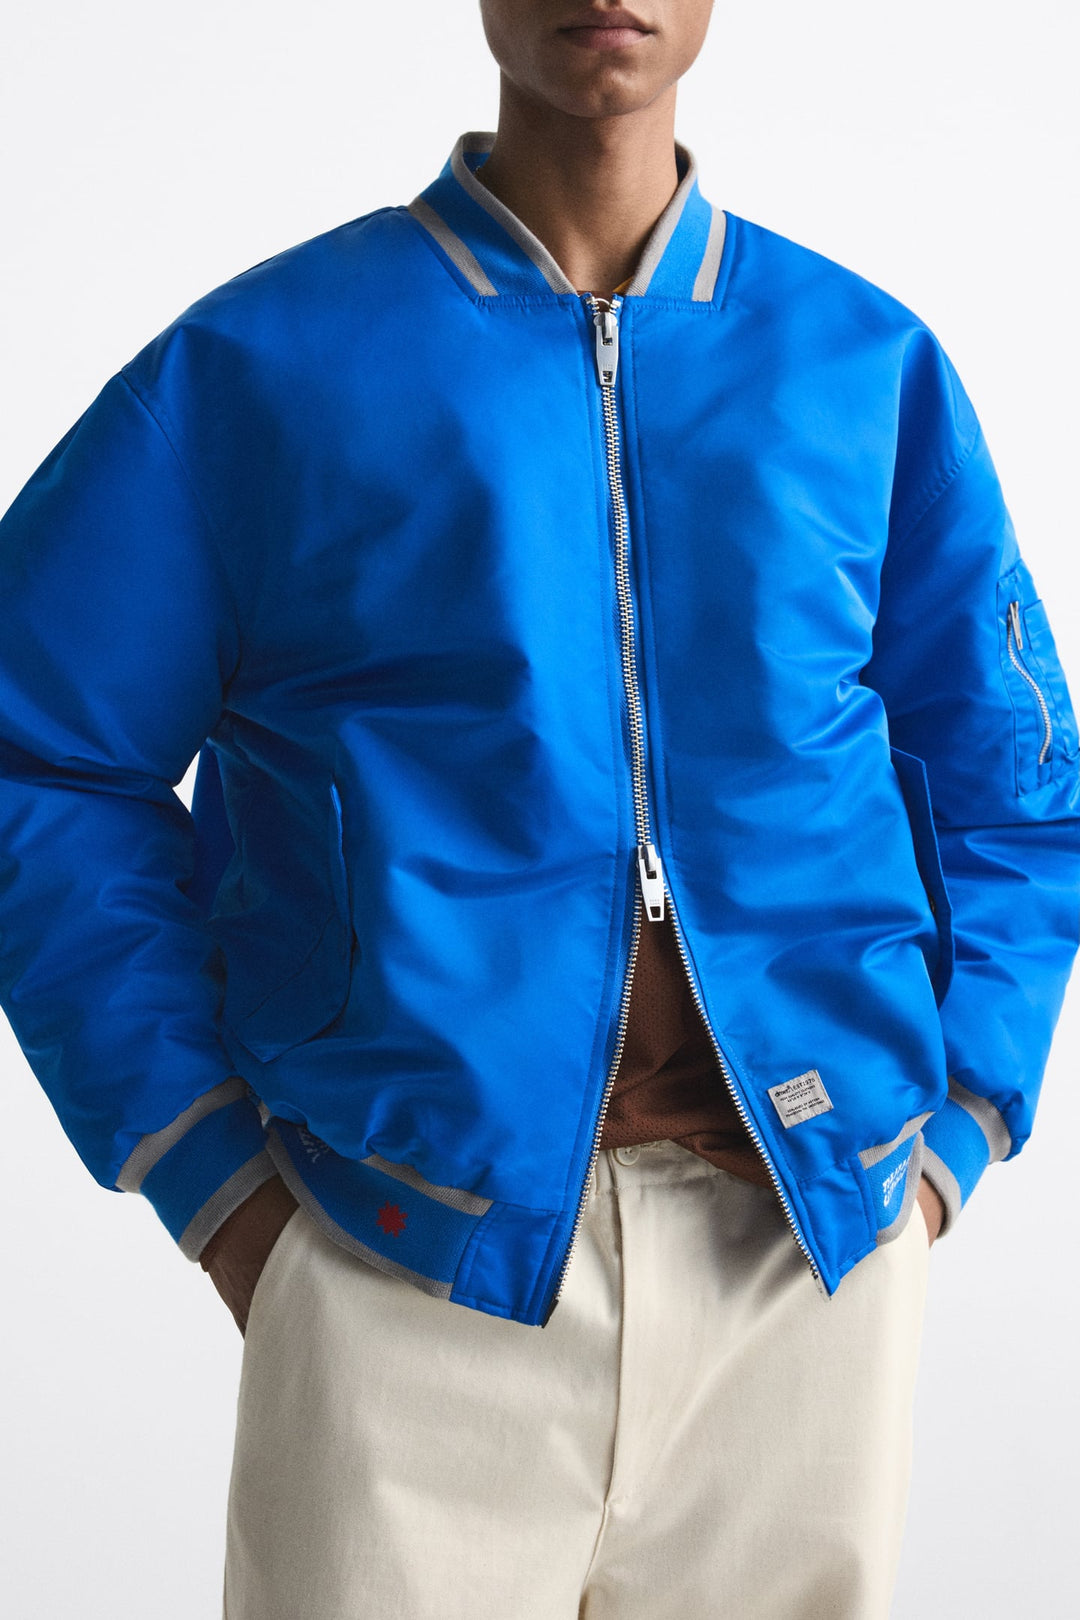 Zara Mens L/S Polyester Jacket 4391/401/420